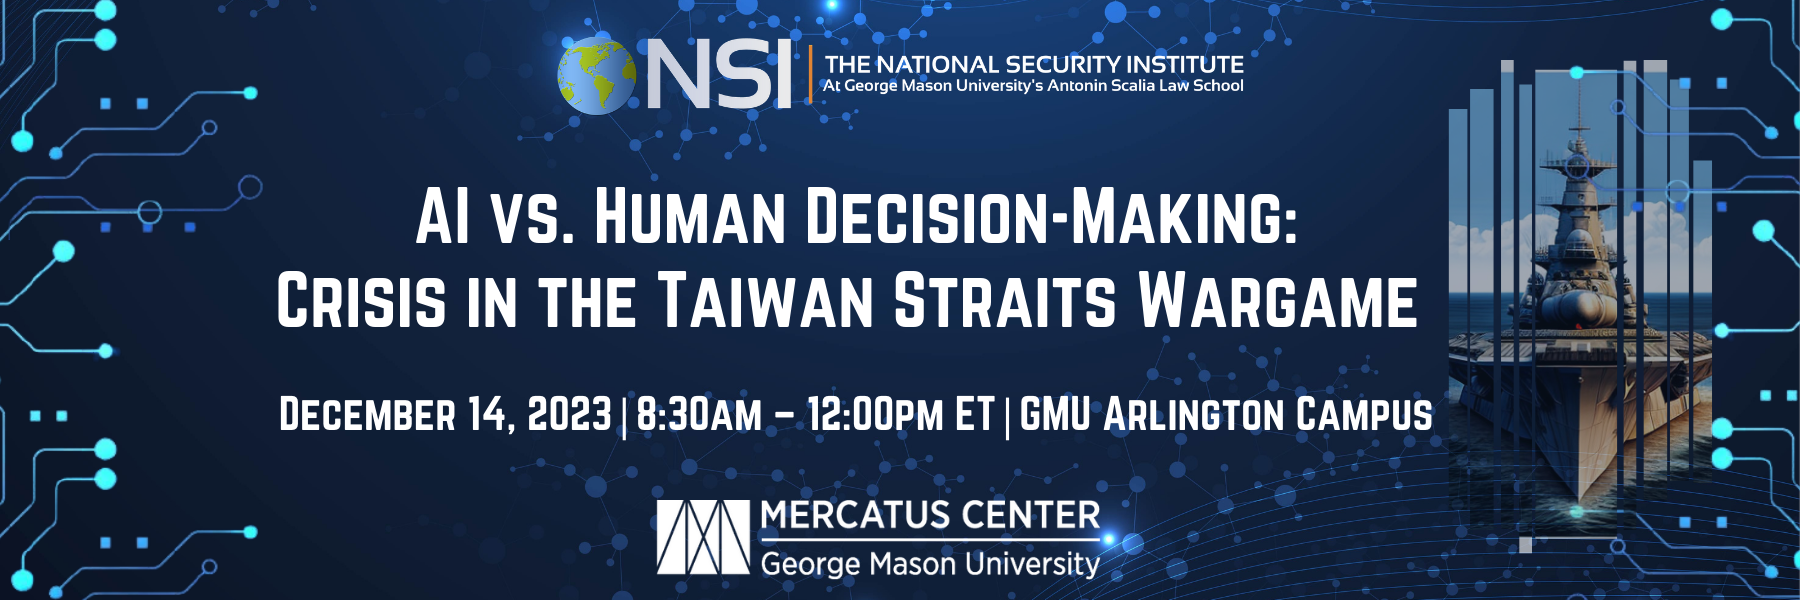 AI vs. Human Decision-Making: Crisis in the Taiwan Straits Wargame